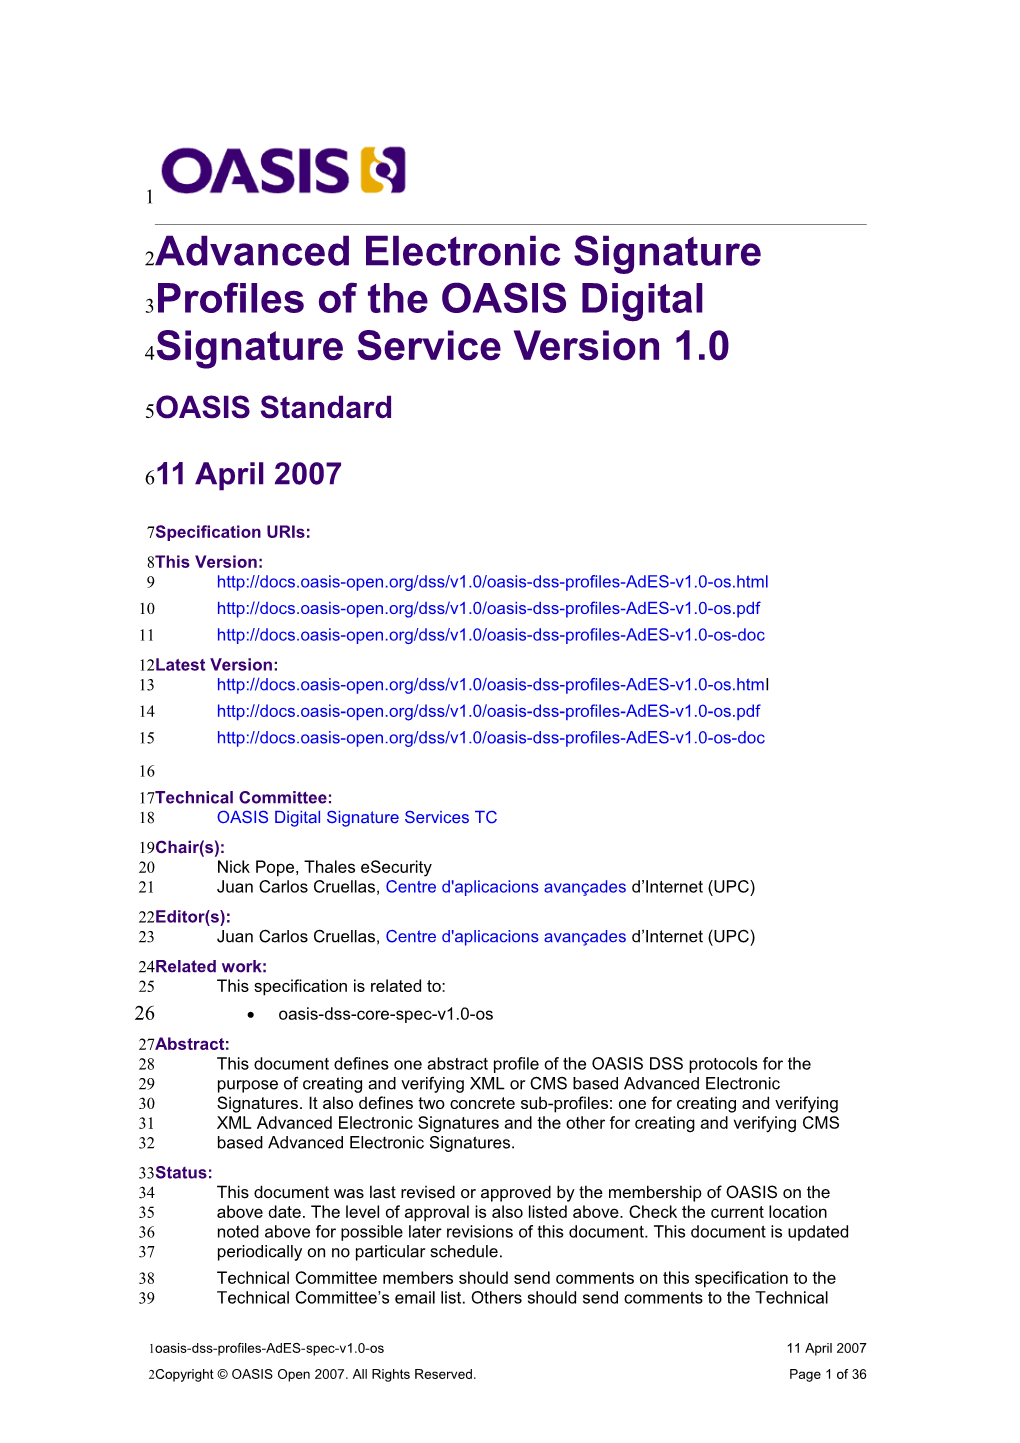 Advanced Electronic Signature Profiles of the OASIS Digital Signature Serviceversion 1.0